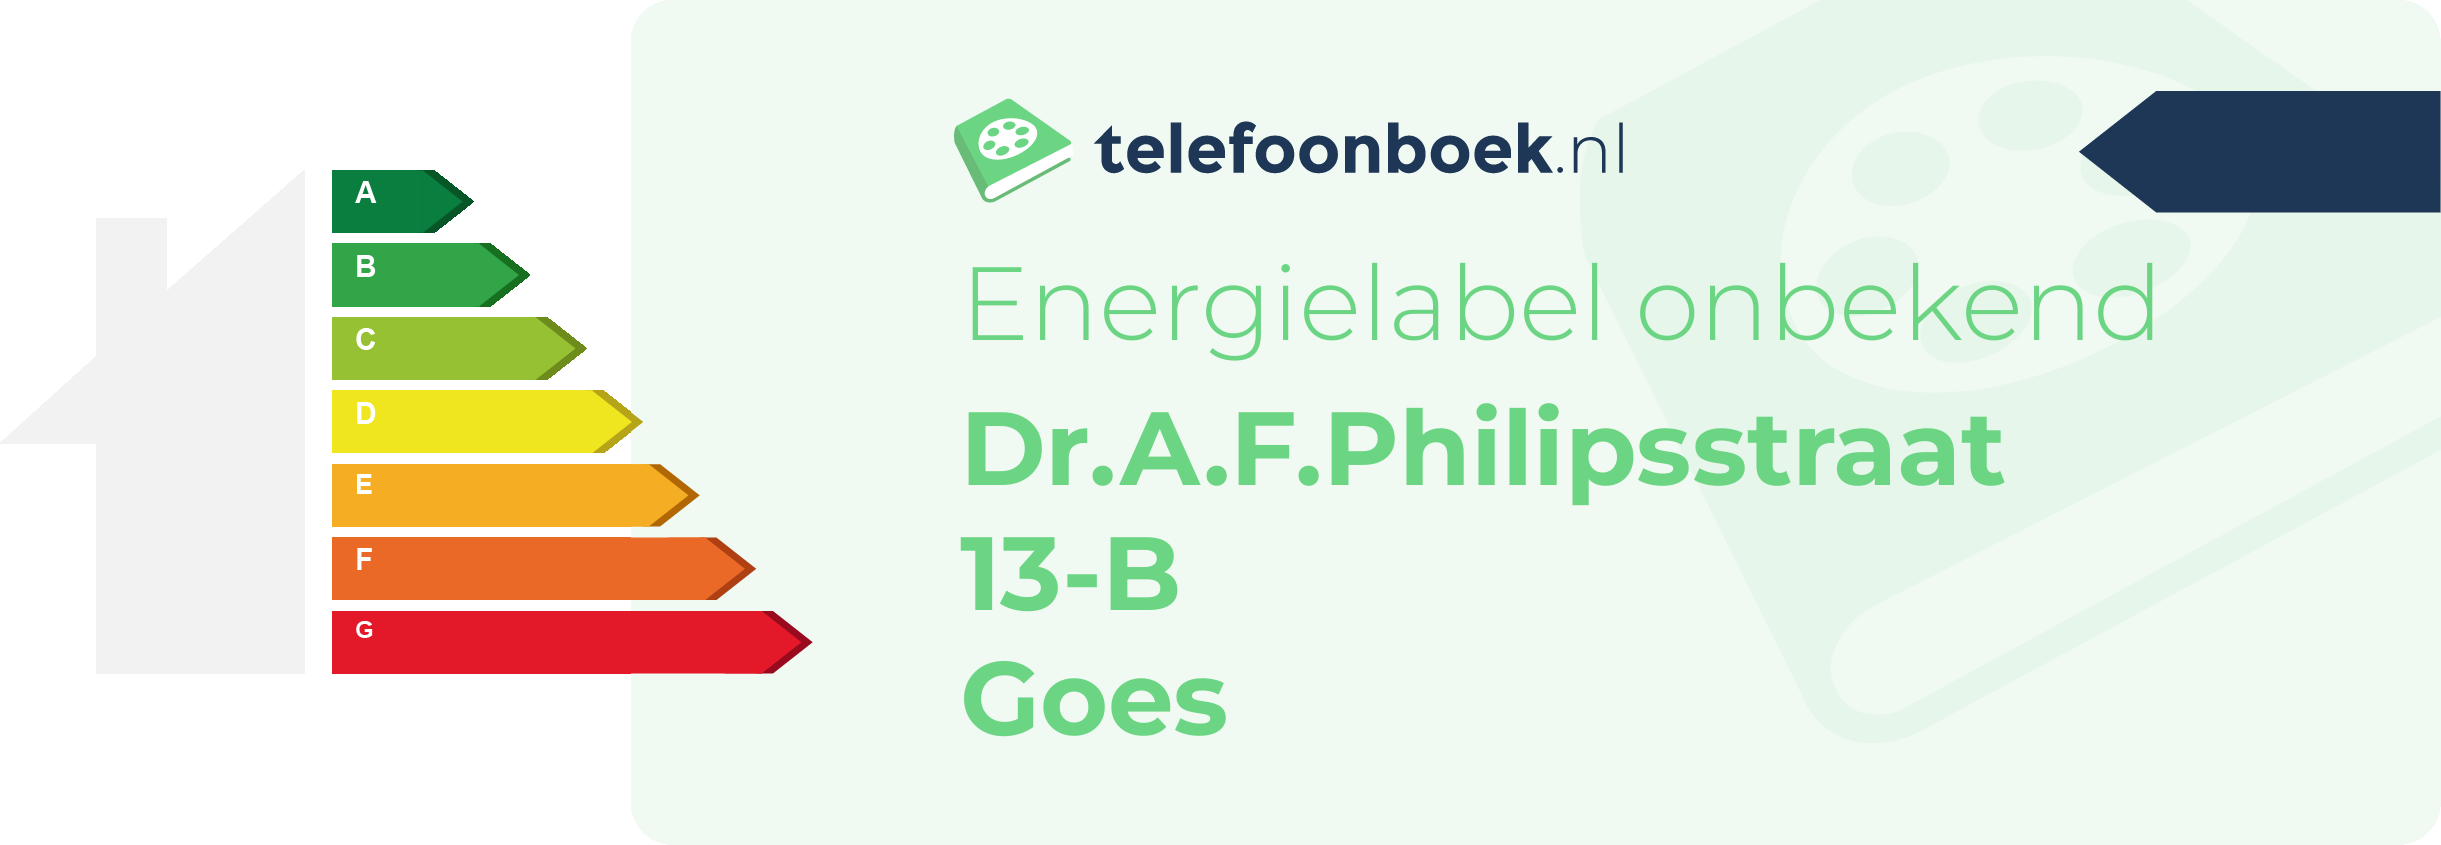 Energielabel Dr.A.F.Philipsstraat 13-B Goes